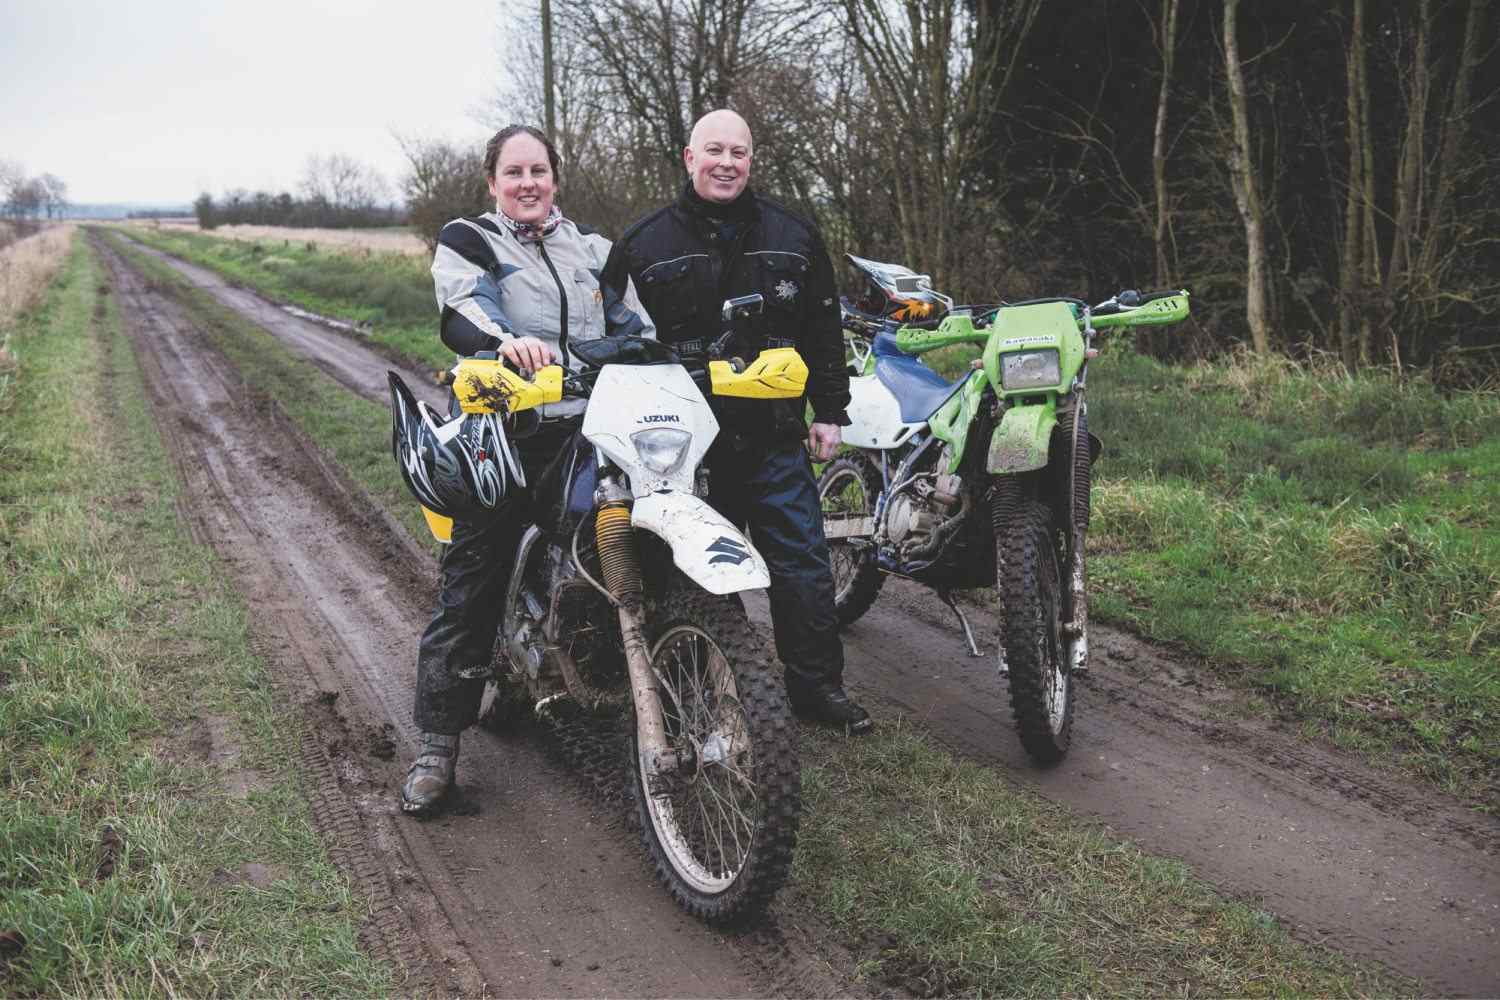 Mark Dawkins and Sarah Luker are keen green laners, and take to the trails on a Kawasaki KLX650 and Suzuki RMZ400.